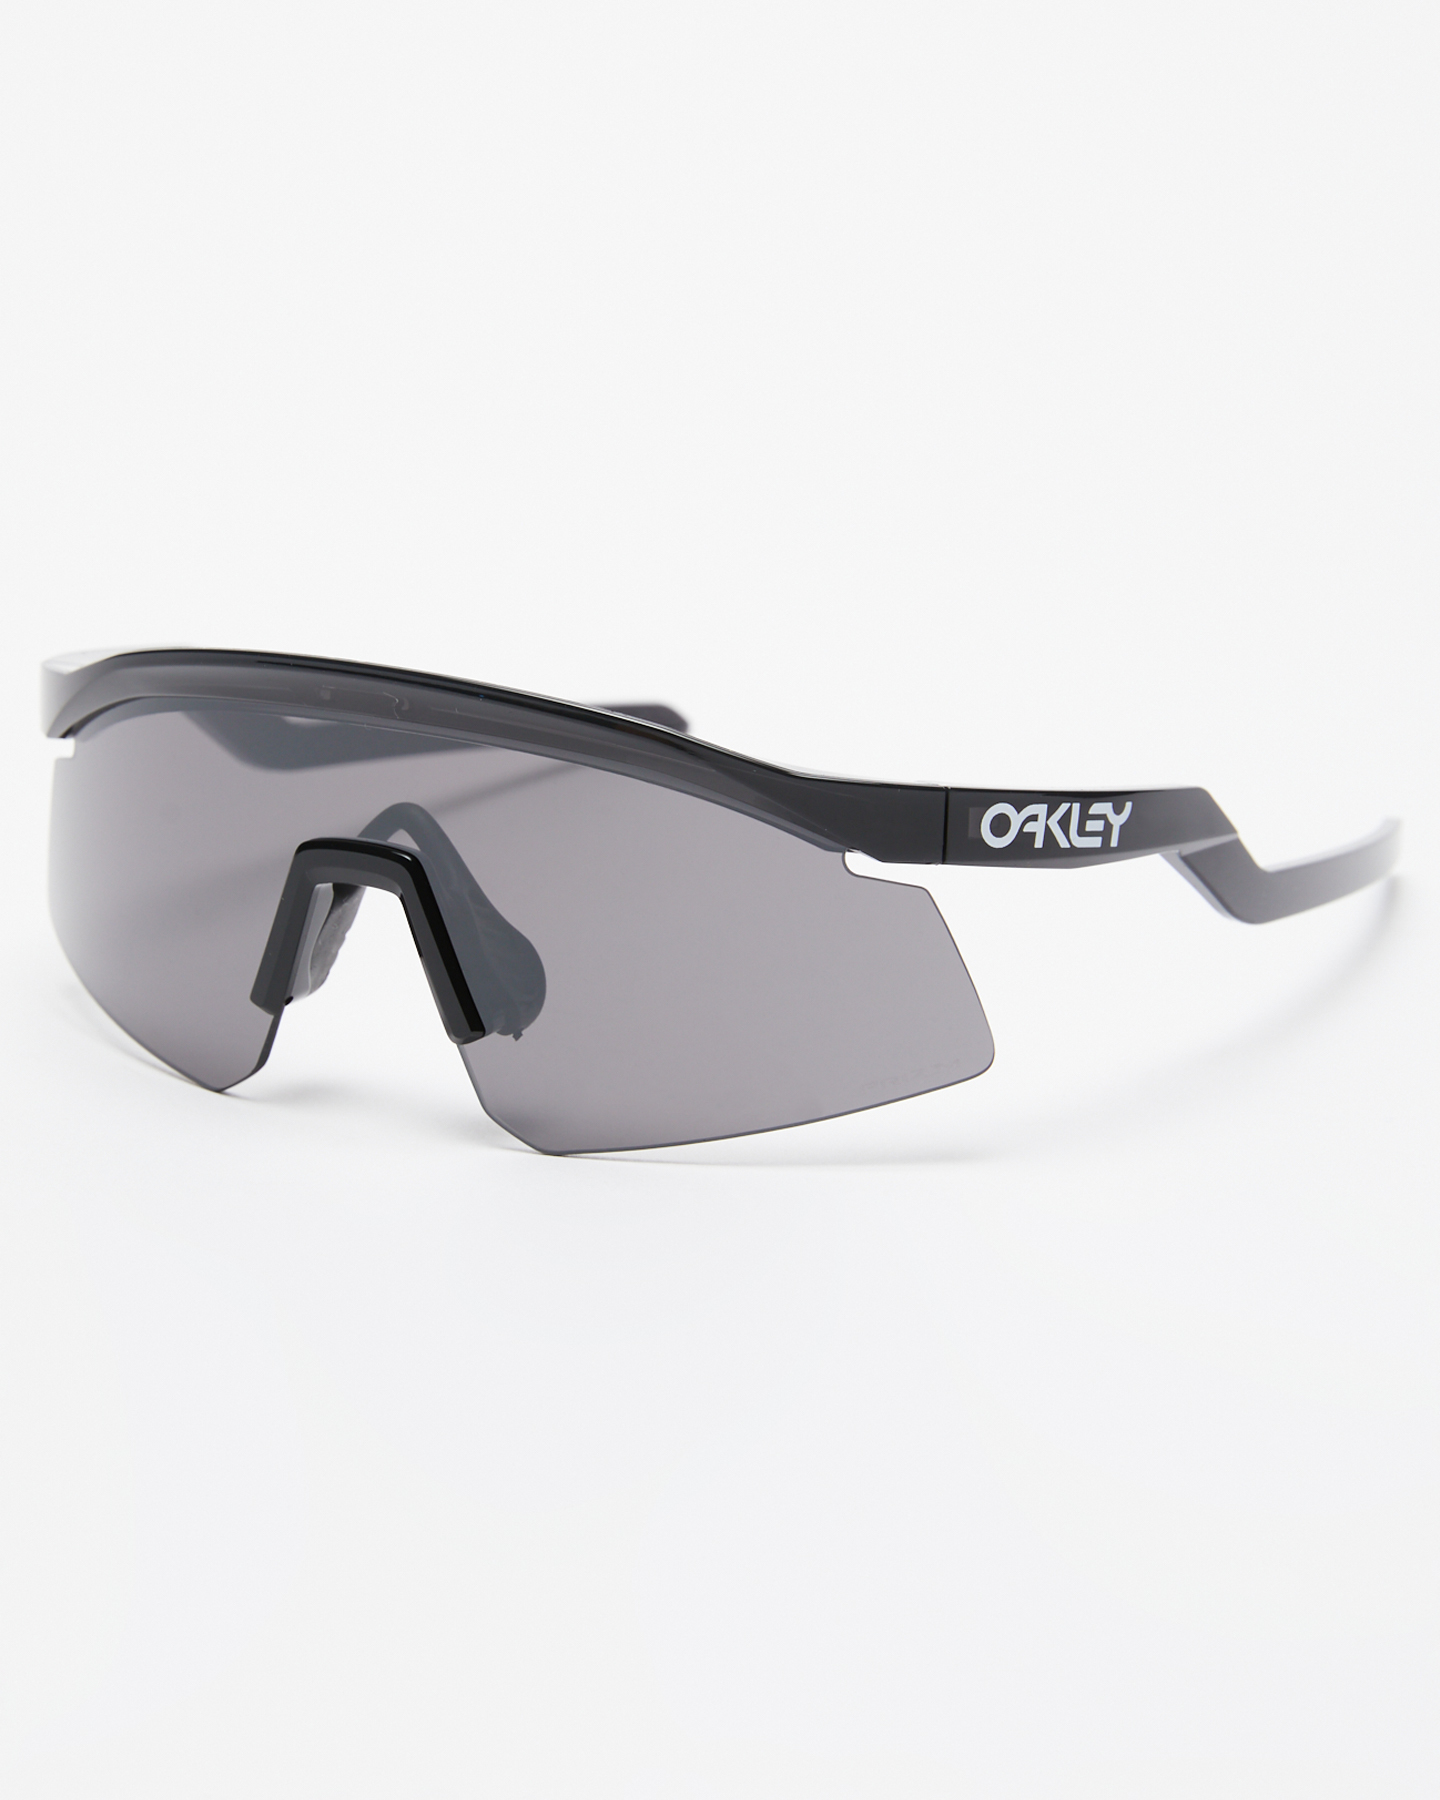 Oakley Hydra Sunglasses Black Ink | SurfStitch